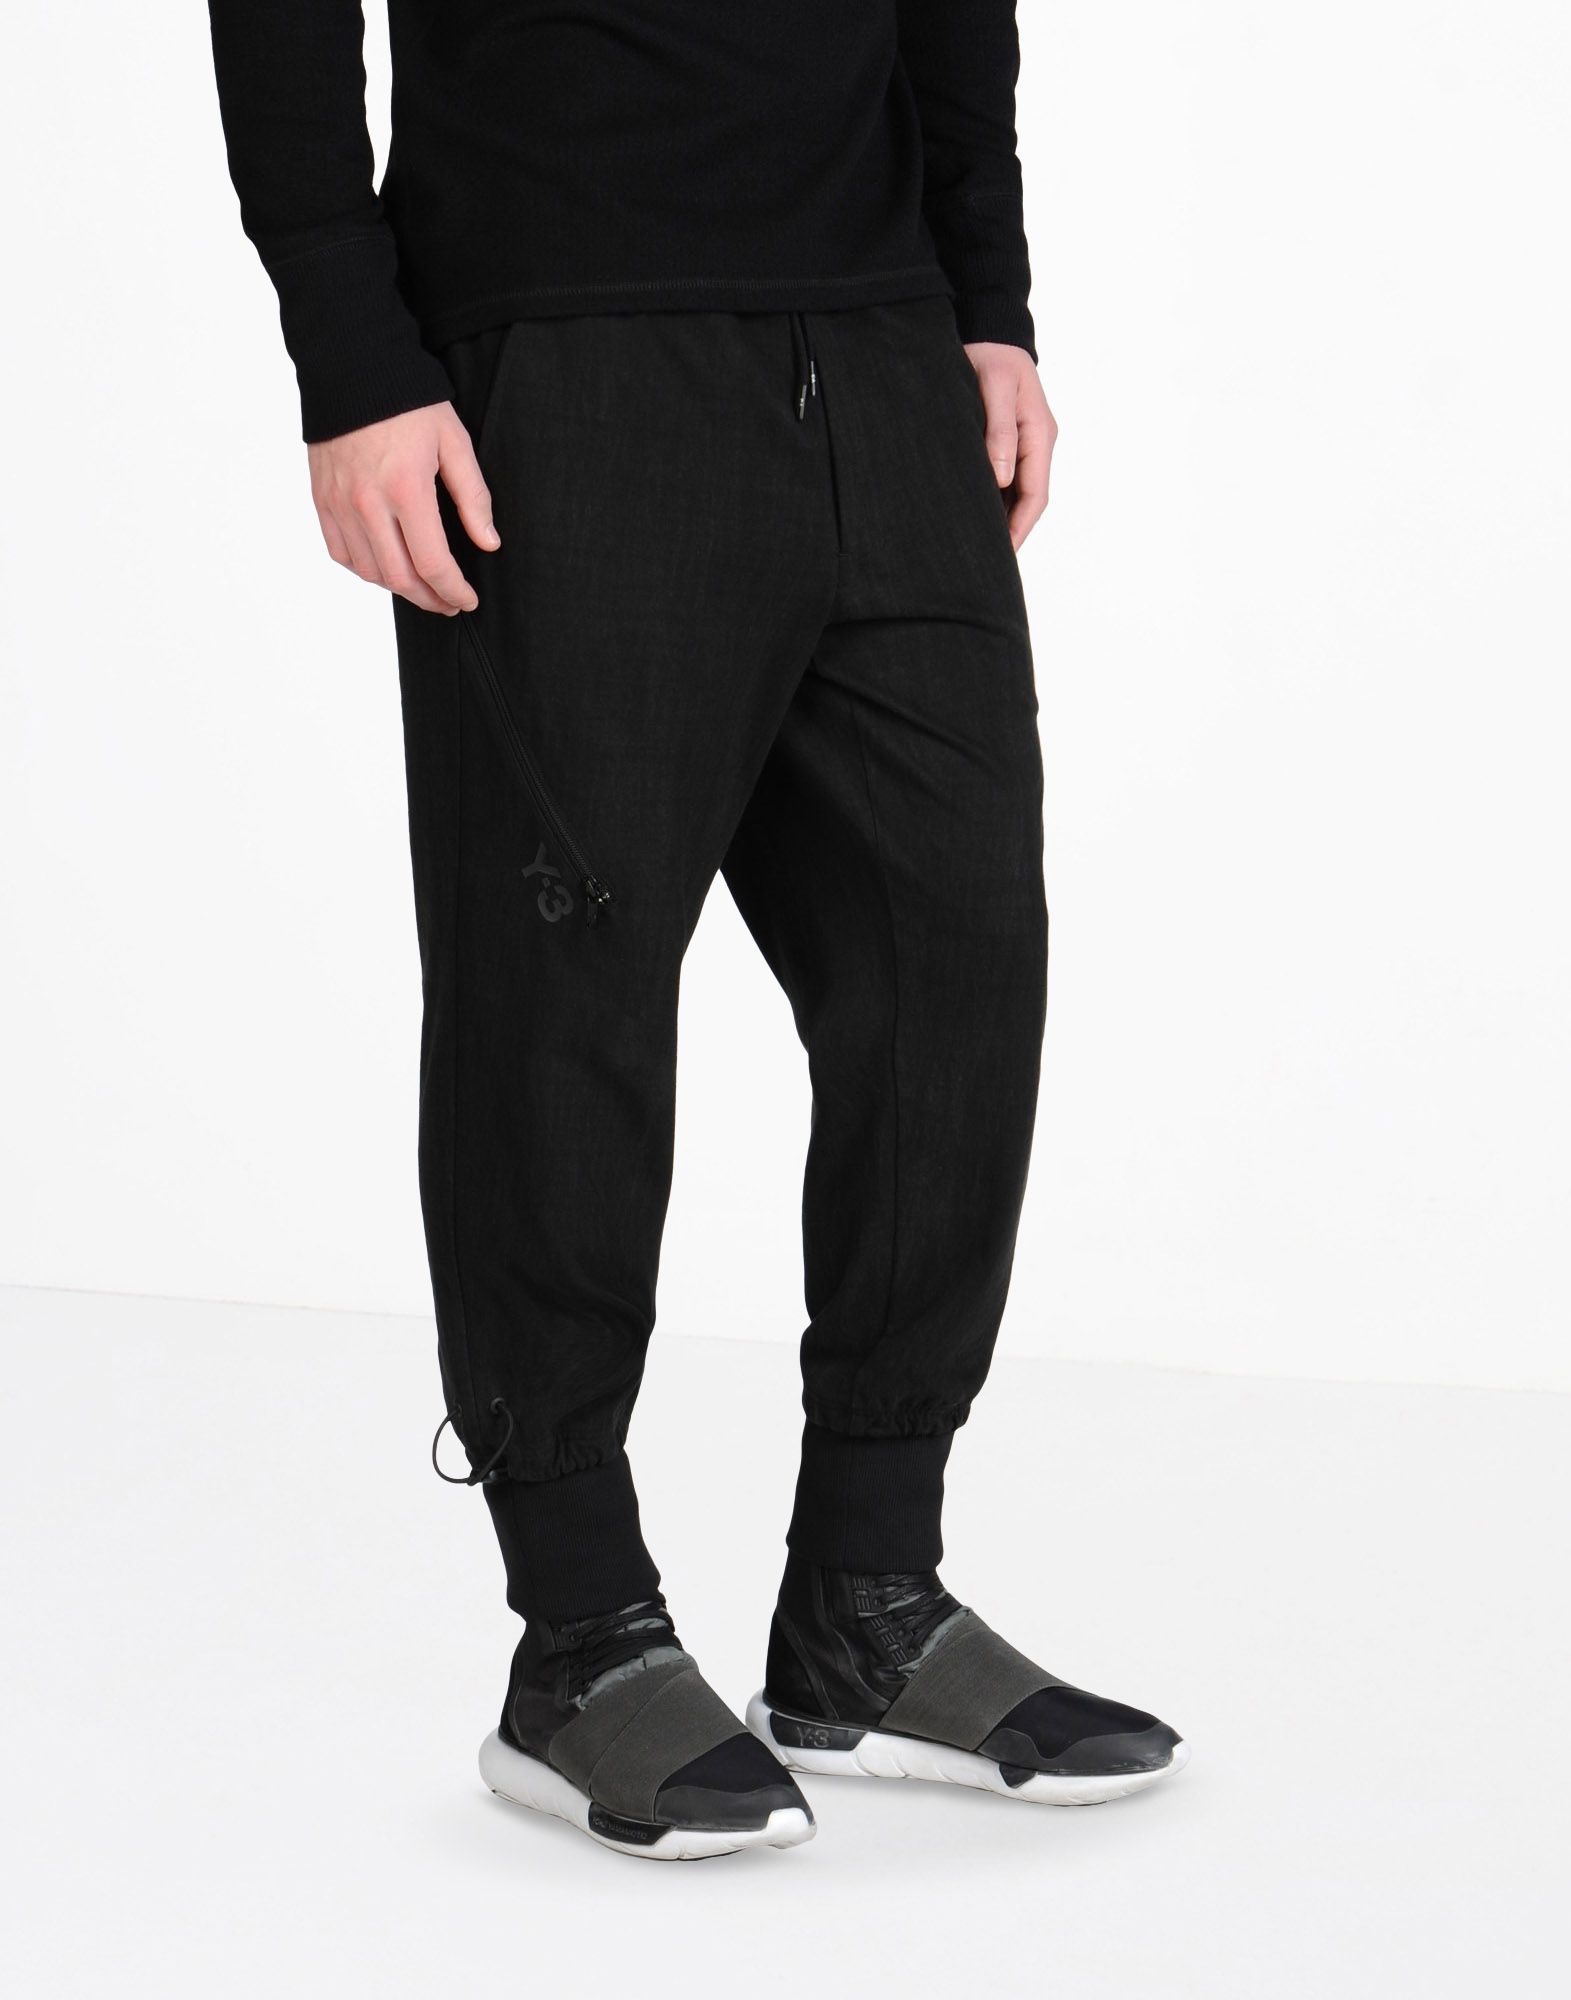 Y 3 GRAIN JERSEY PANT ‎ ‎Casual Pants‎ ‎ ‎ | Adidas Y-3 Official Site